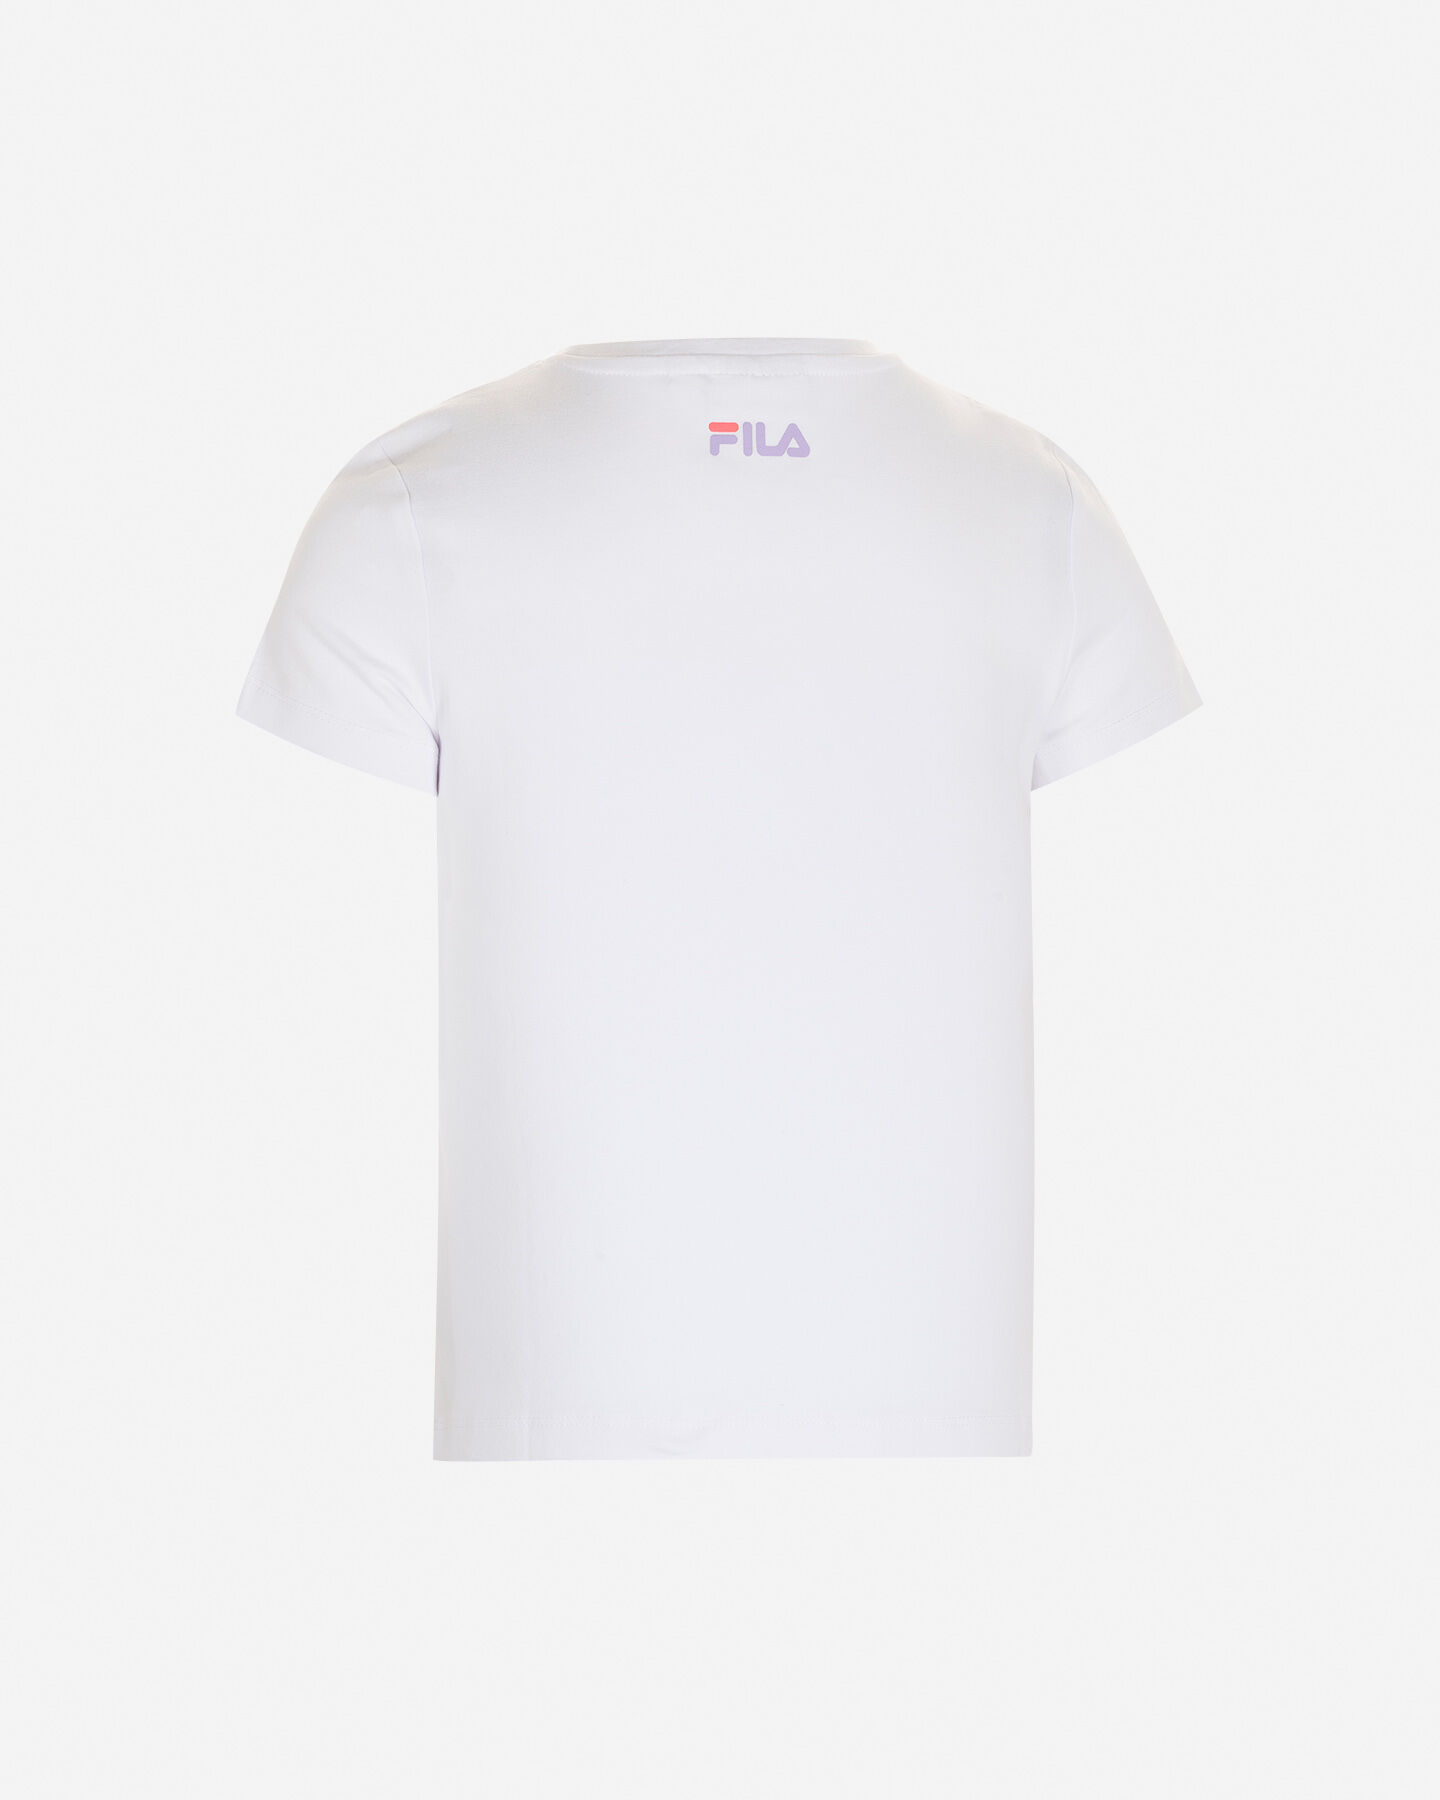  T-Shirt FILA GRAPHICS LOGO LINEA JR S4100806|001|6A scatto 1